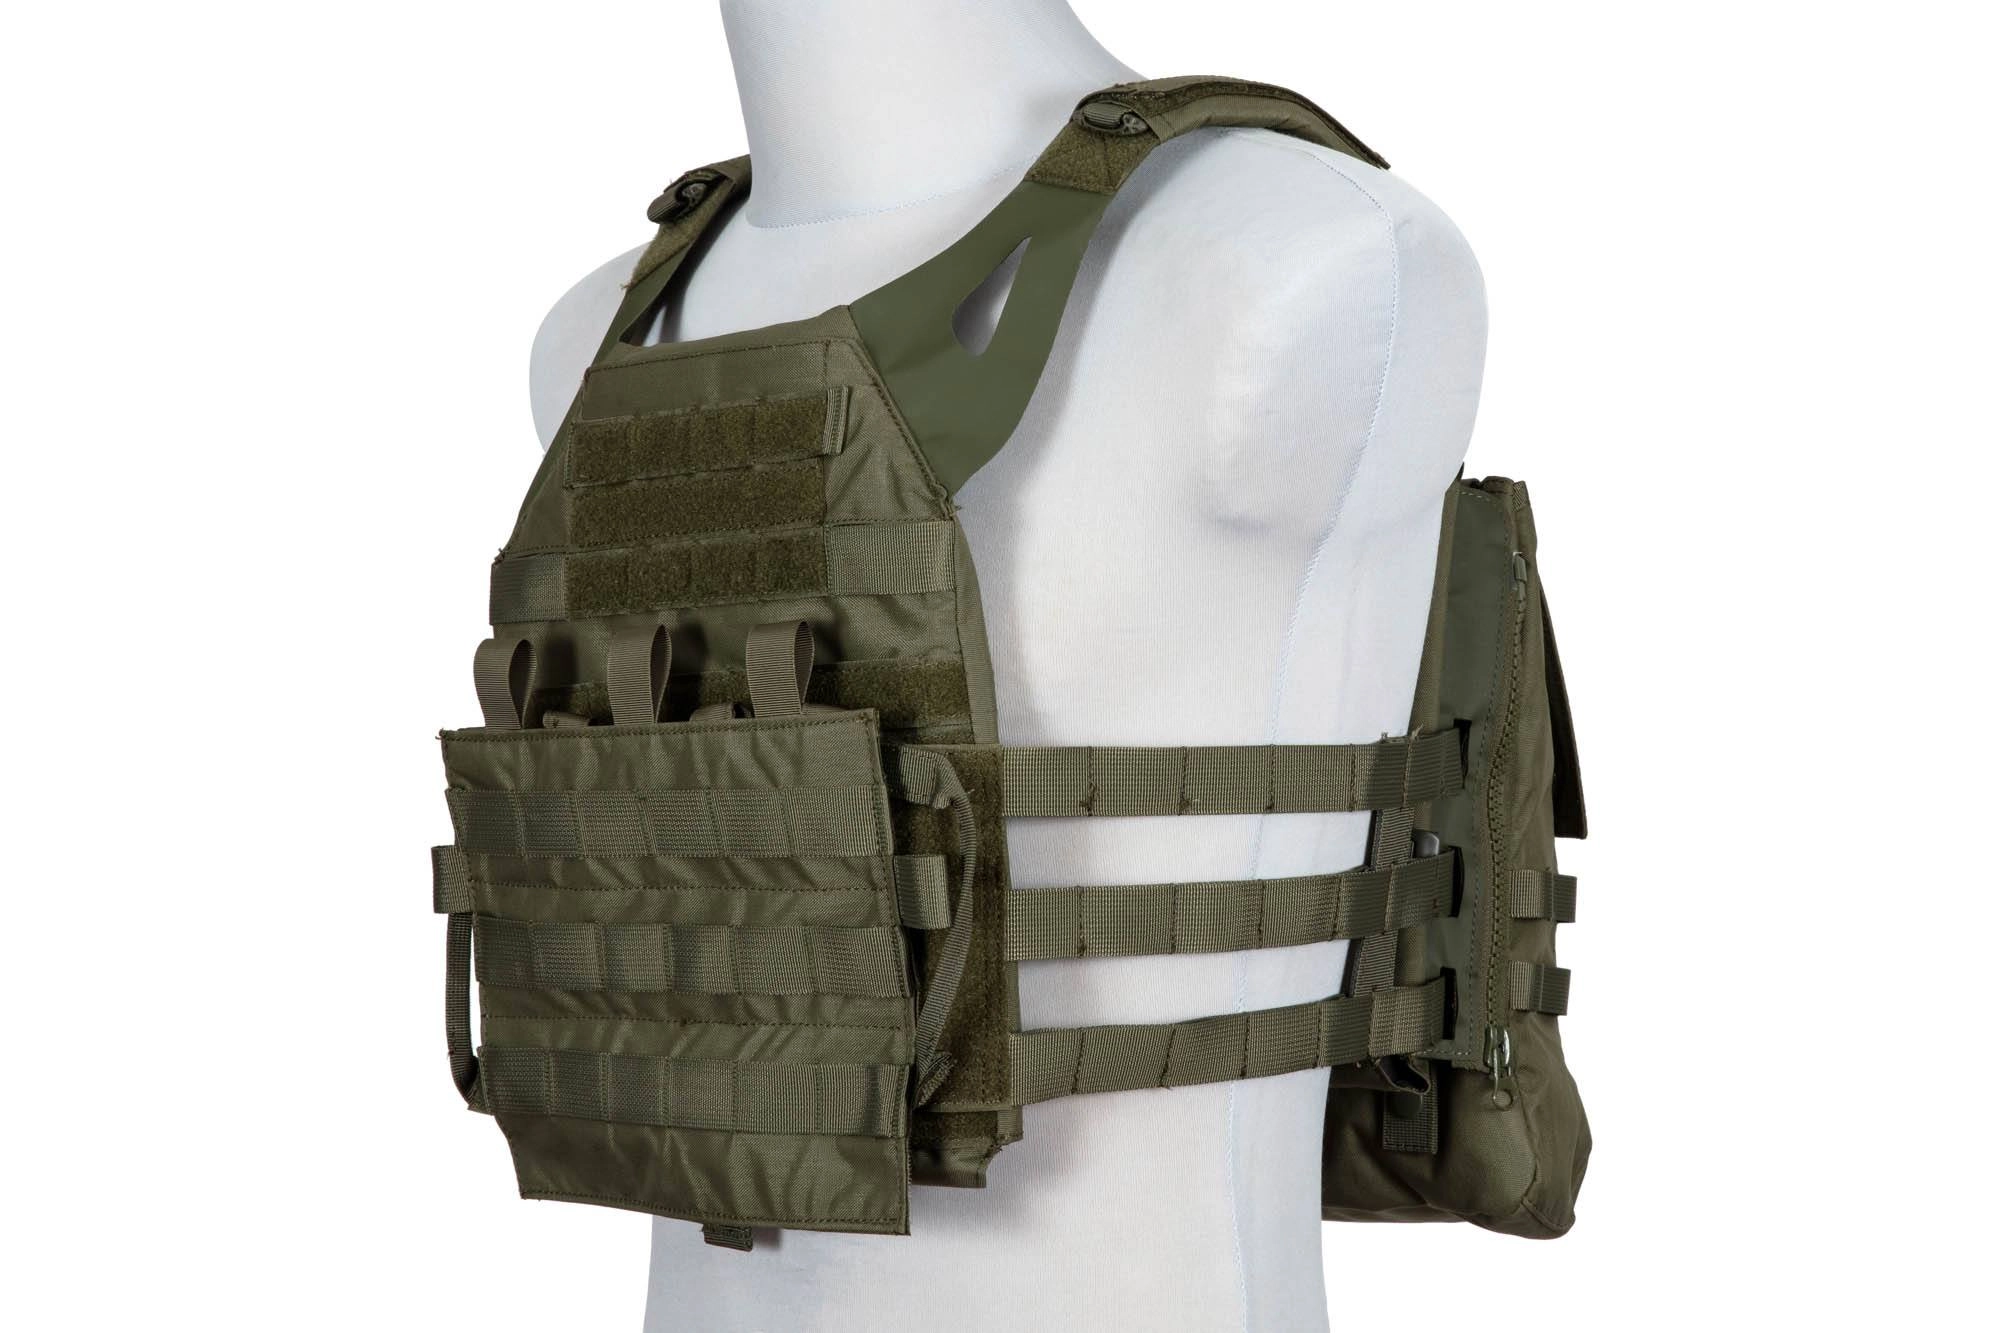 Jump MK2 Tactical Vest - Olive Drab